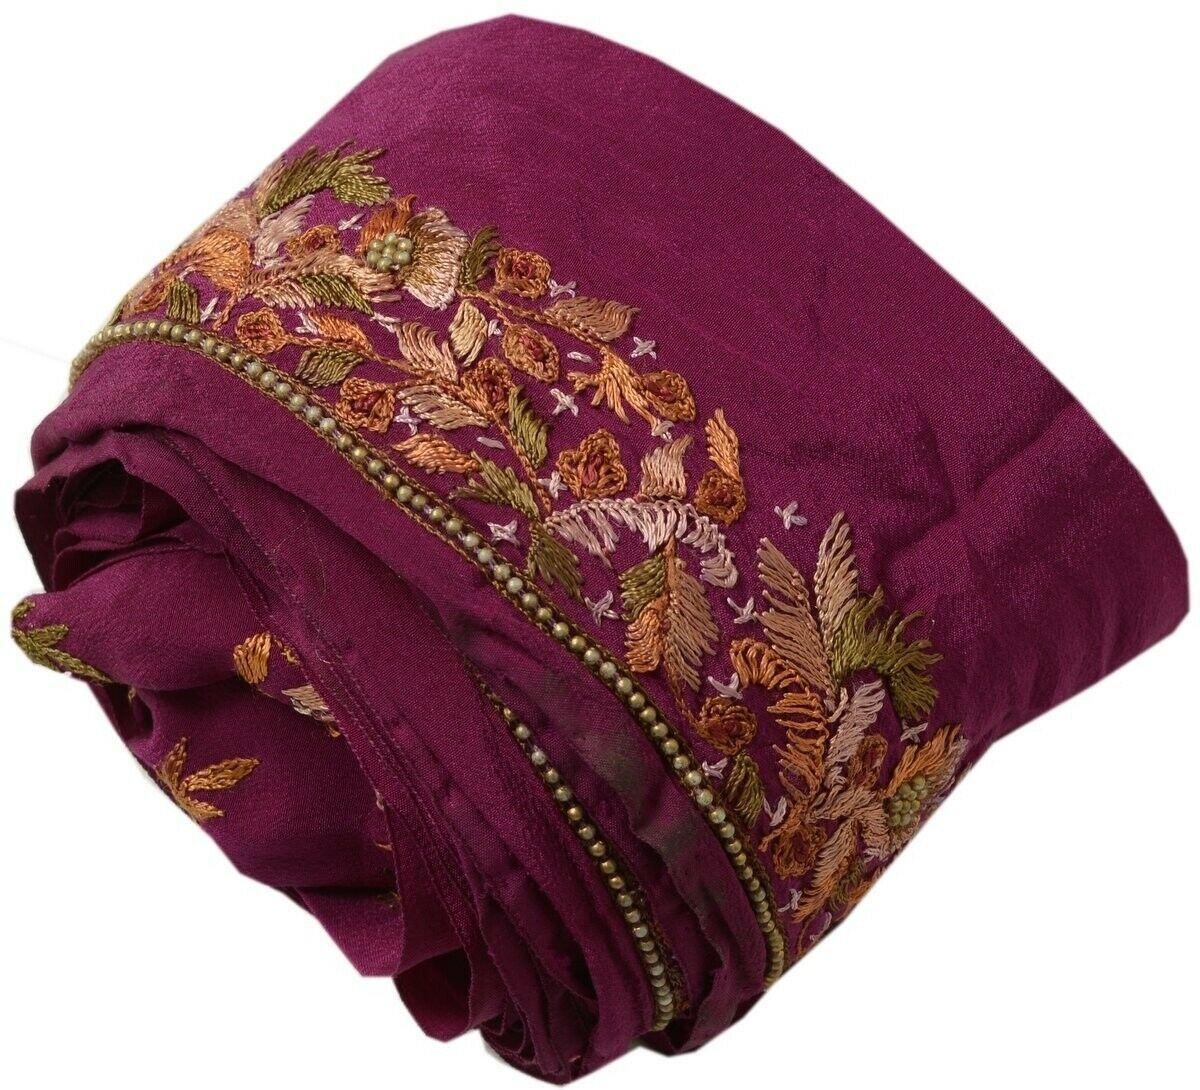 Vintage Sari Border Indian Craft Trim Hand Embroidered Ribbon Lace Dark Magenta